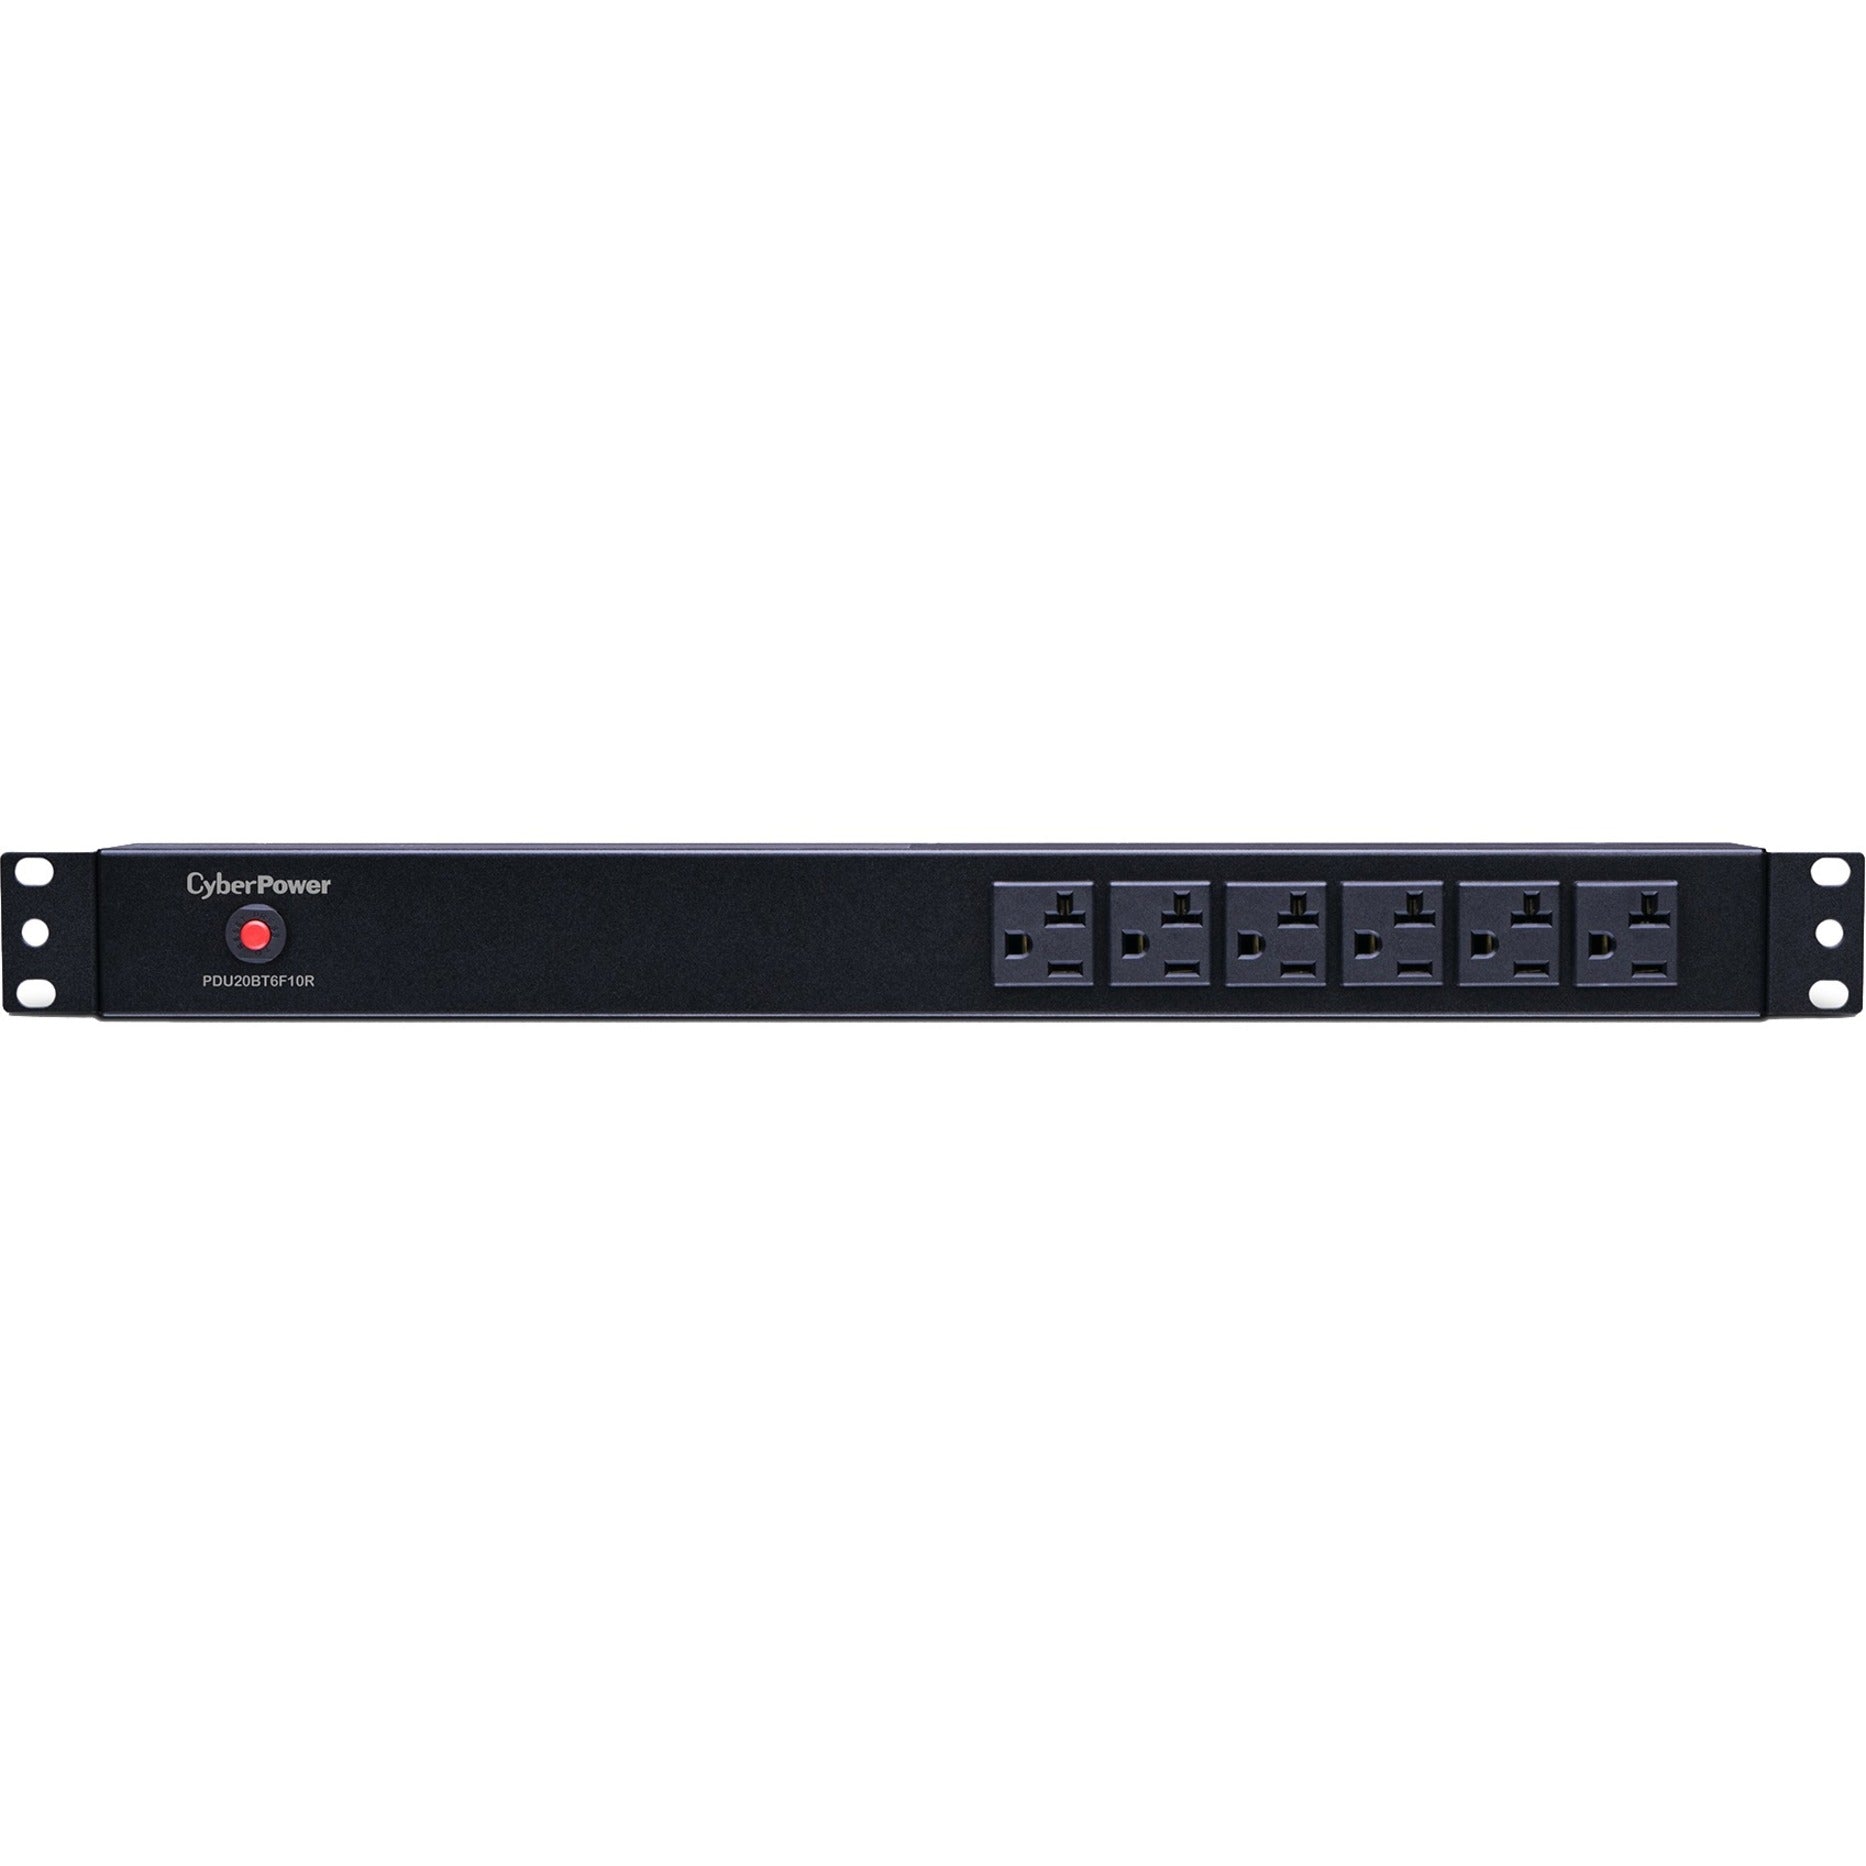 CyberPower PDU20BT6F10R Basic PDU, 16-Outlets, 120V AC, Rack-mountable